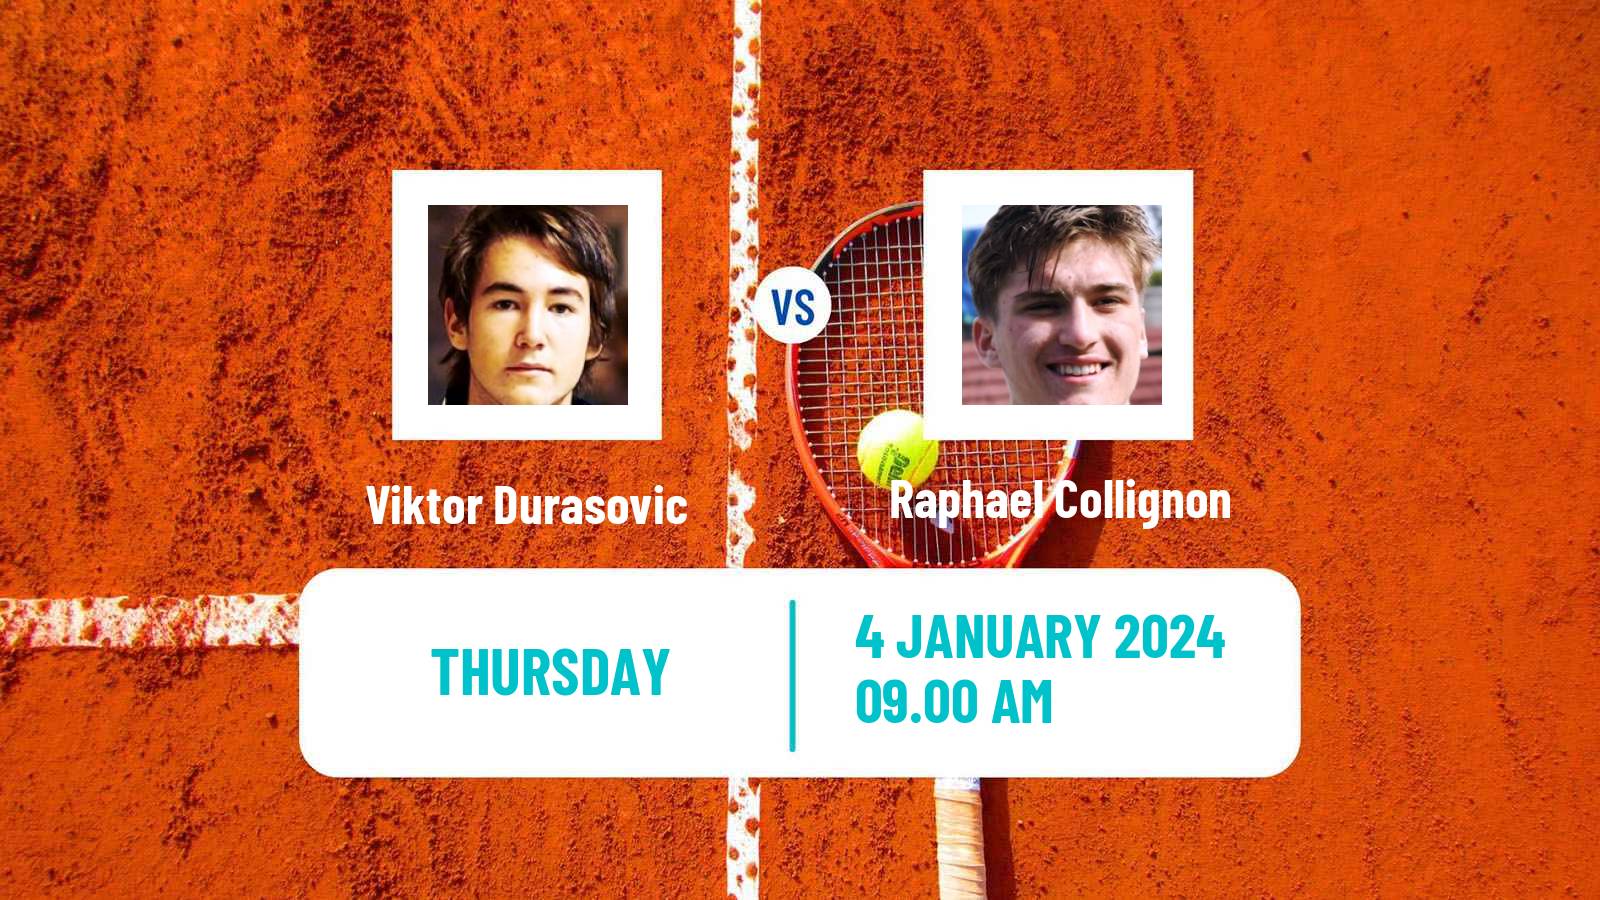 Tennis ITF M25 Esch Alzette Men Viktor Durasovic - Raphael Collignon